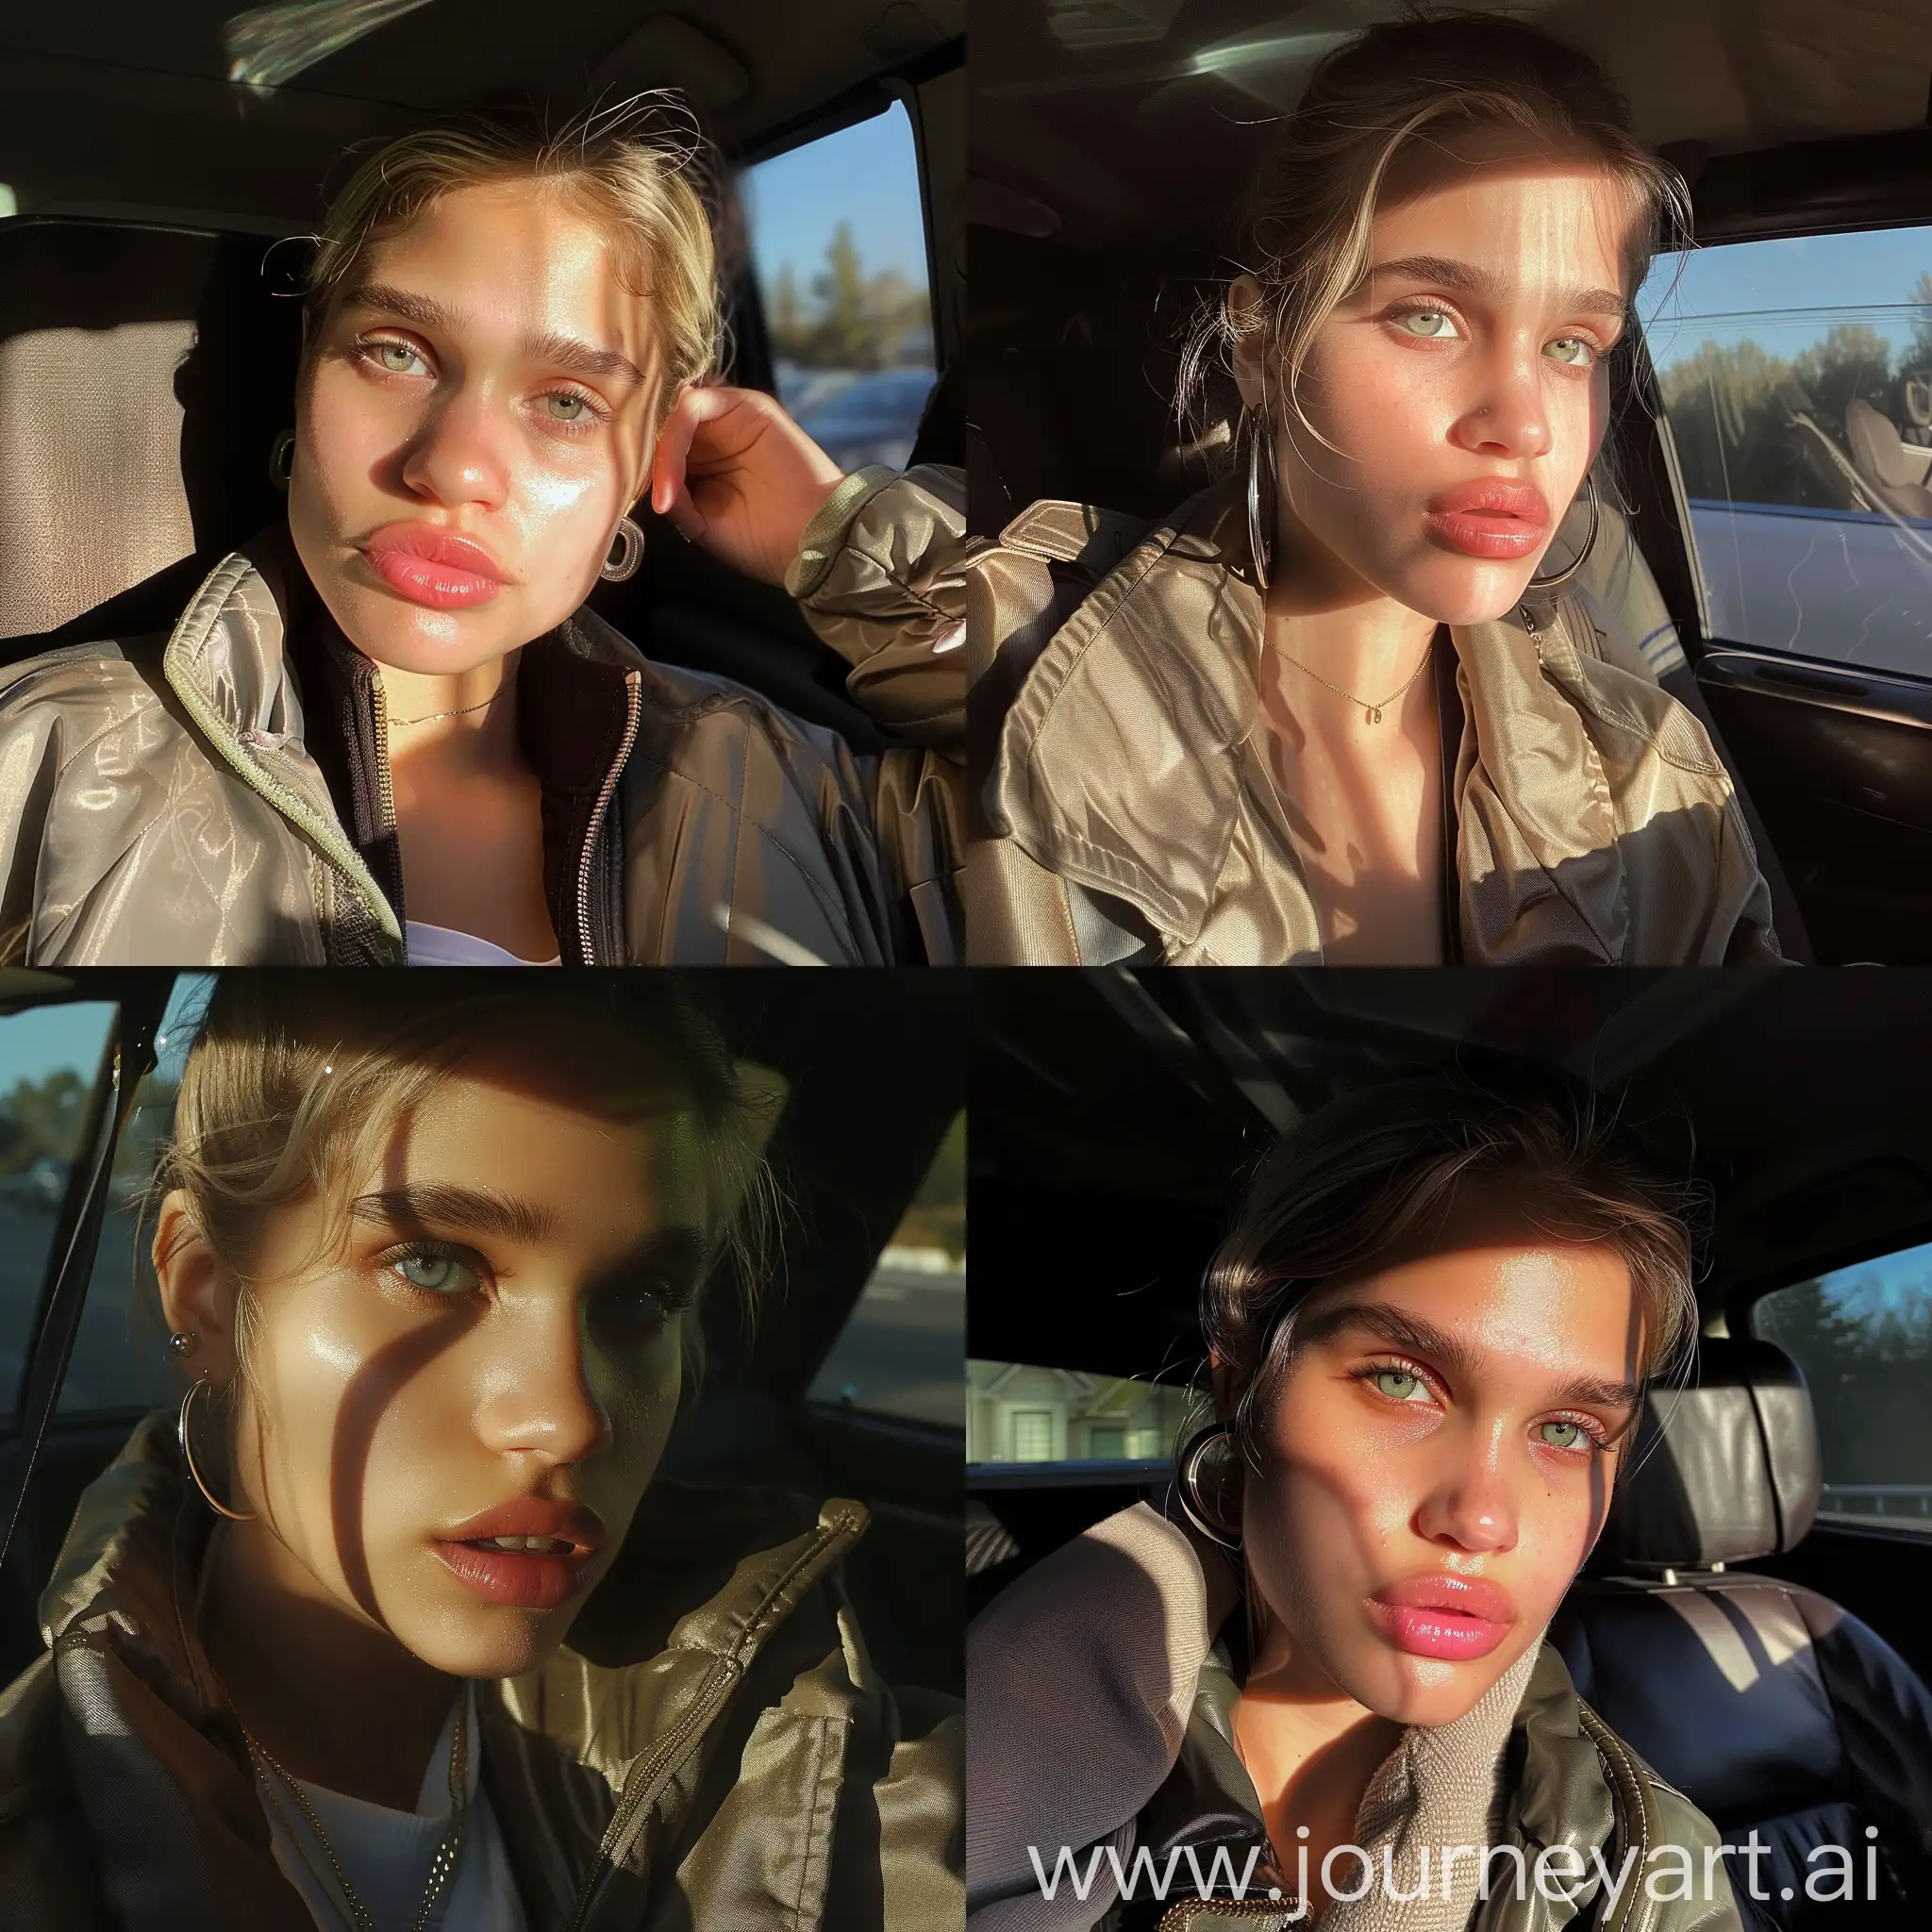 Aesthetic instagram selfie of a super model teenage girl in her car, realistic lighting and shadows